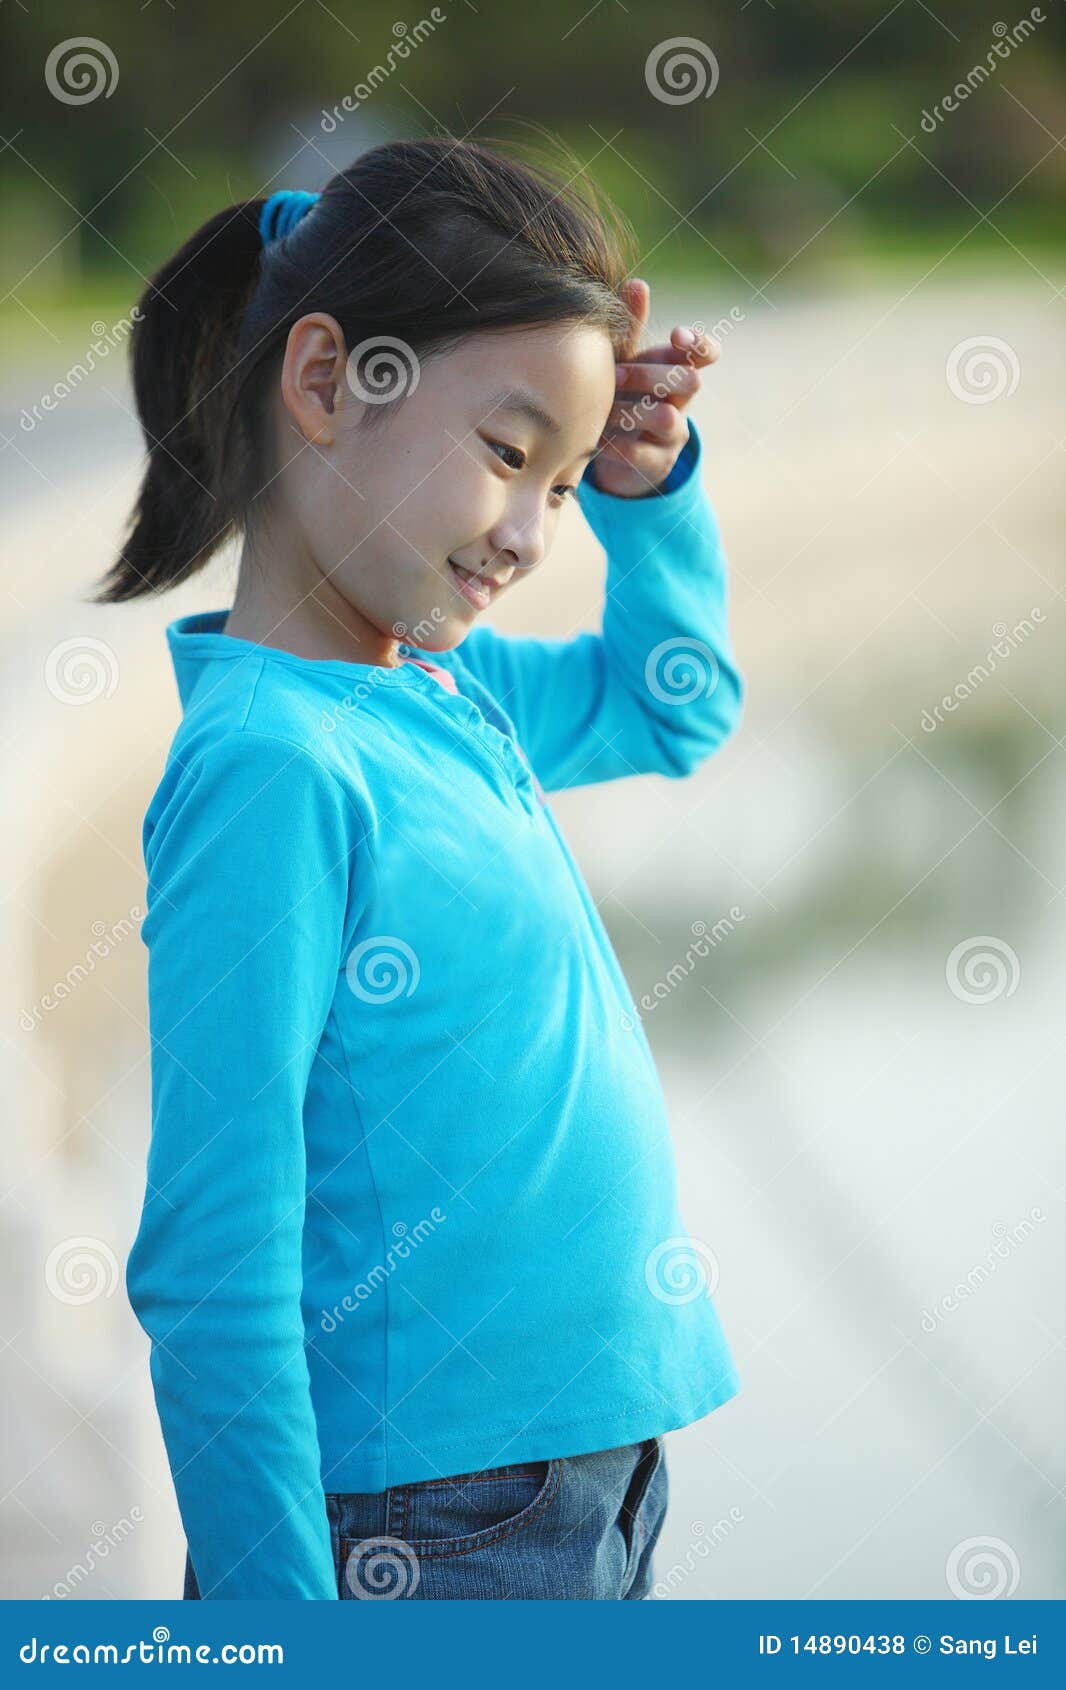 Chinese child stock photo. Image of childhood, china - 14890438